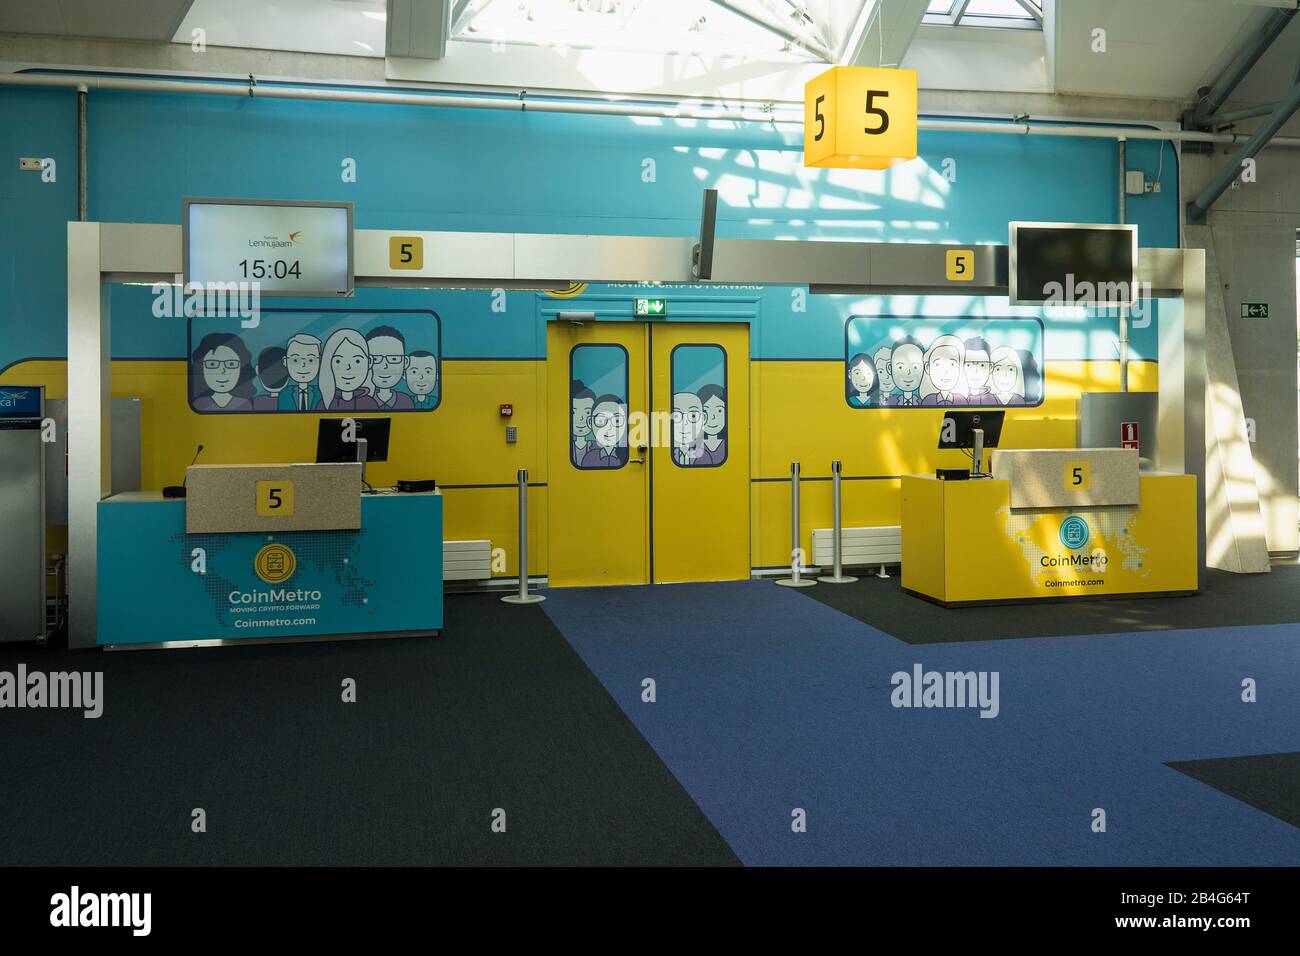 Estonia, Tallinn, Airport, Airport Lennart Meri, modern passenger terminal, Gate 5, 'subway'. Stock Photo